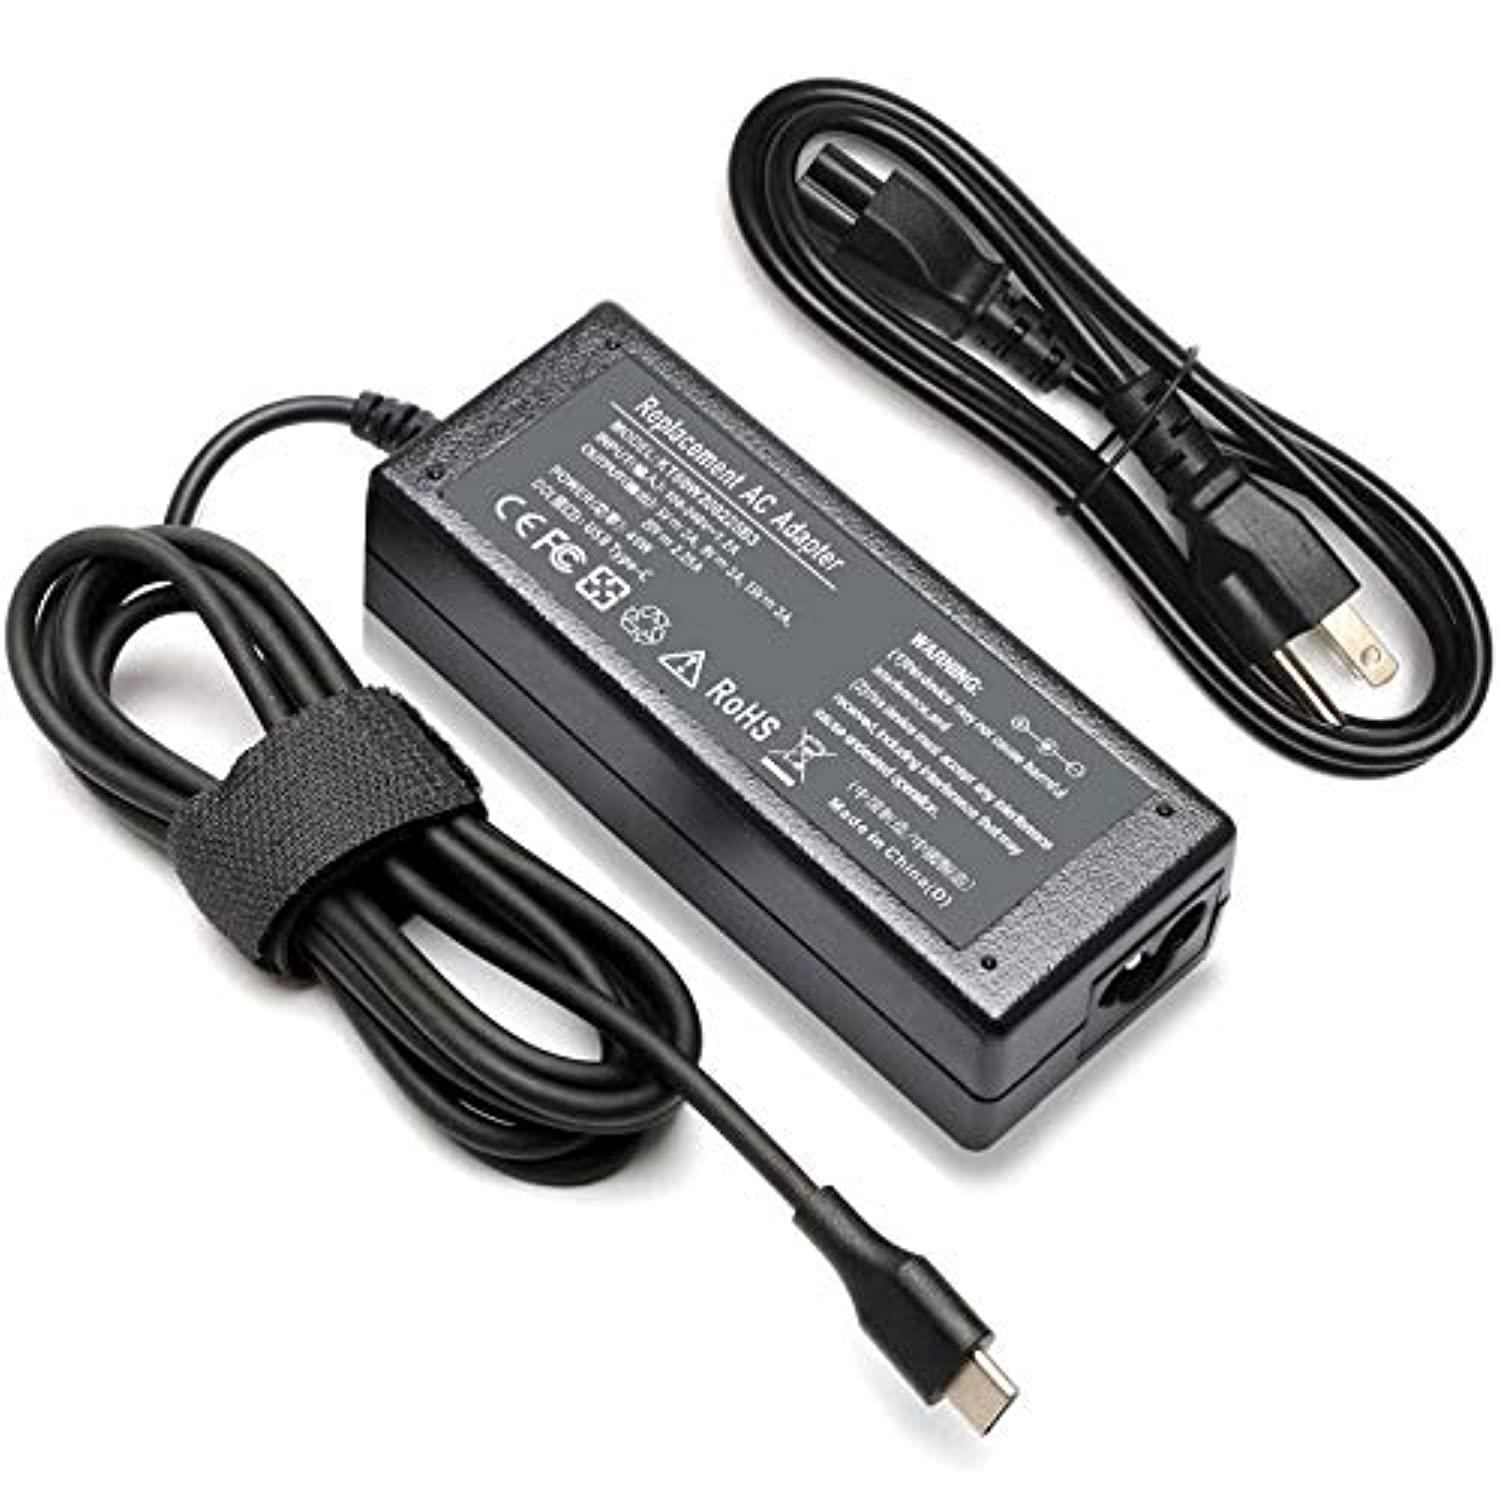 LNOCCIY 45w type c usb c charger adapter for samsung chromebook xe310xba xe350xba xe510c24 xe513c24 xe520qab xe521qab xe525qbb xe310x